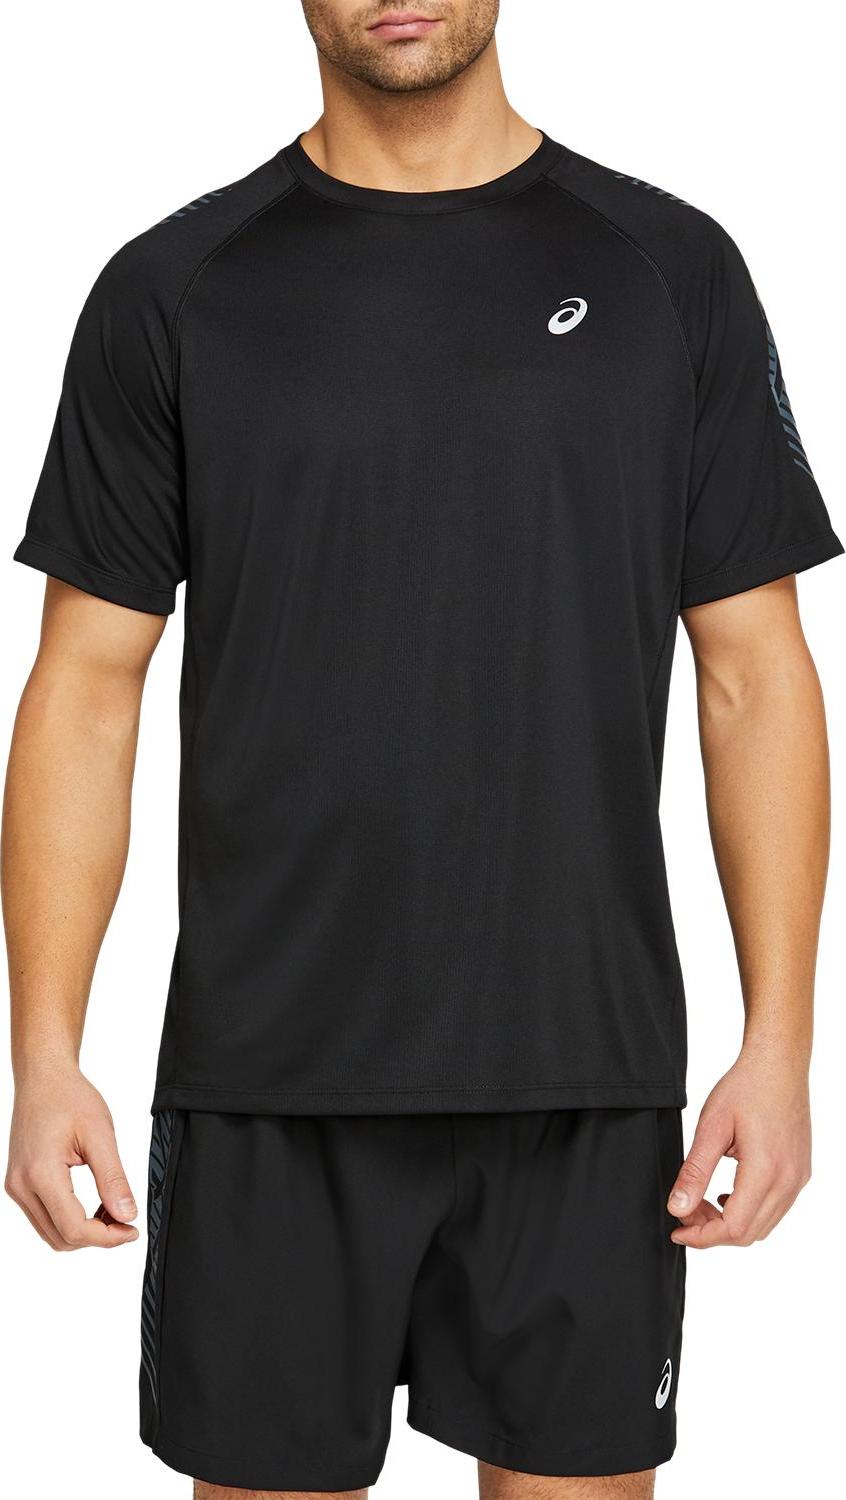 Men's Icon Short Sleeve Top Performance Black/Carrier Grey